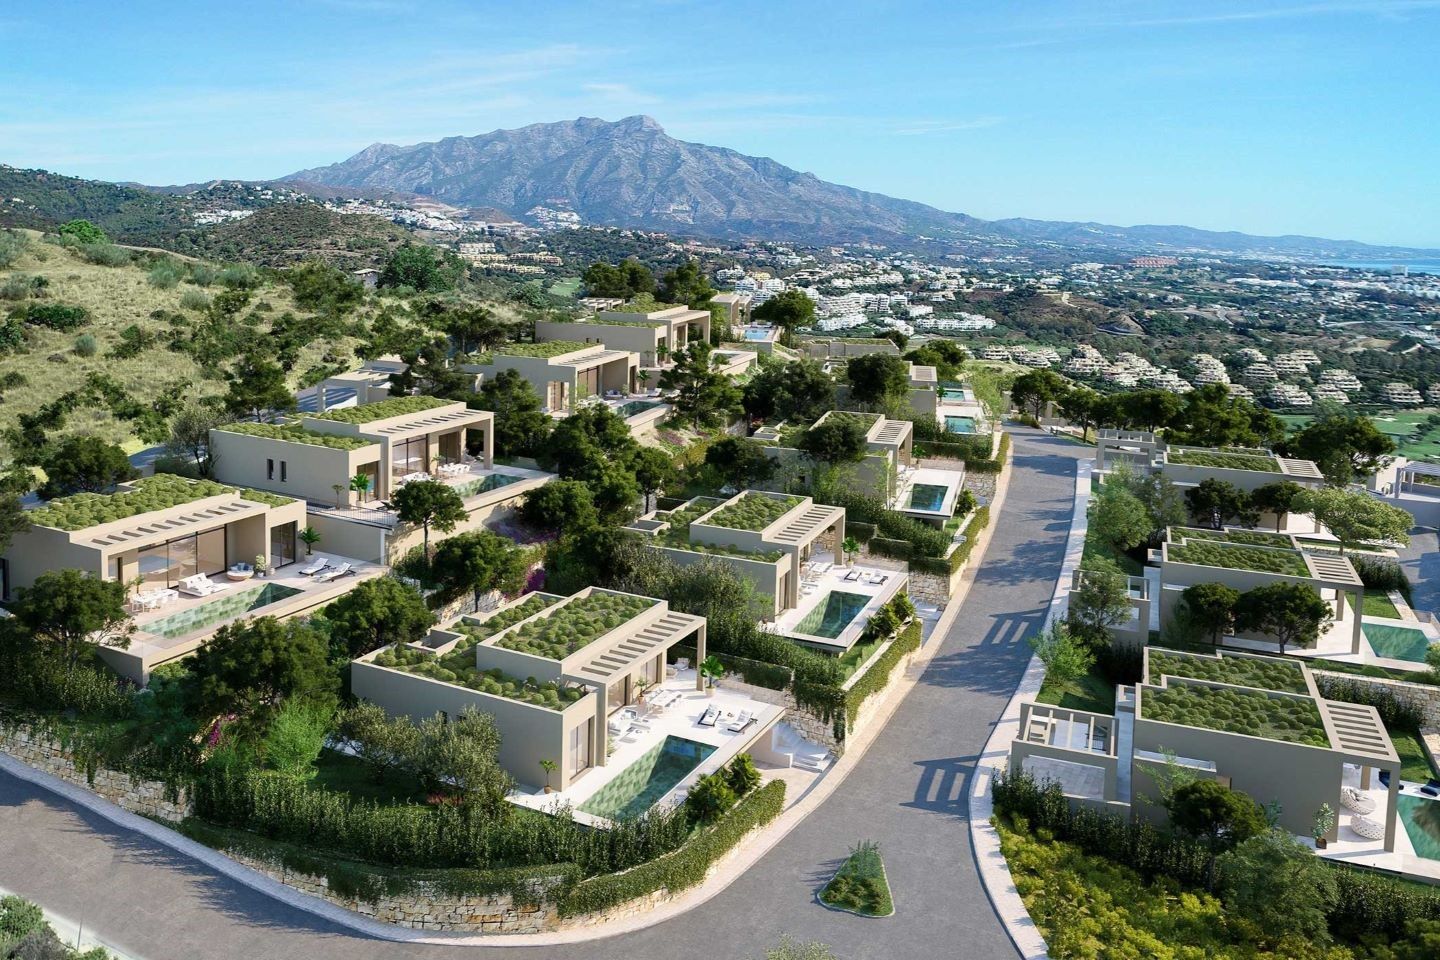 La Alqueria: Exceptional modern villa in an organic concept | Engel & Völkers Marbella